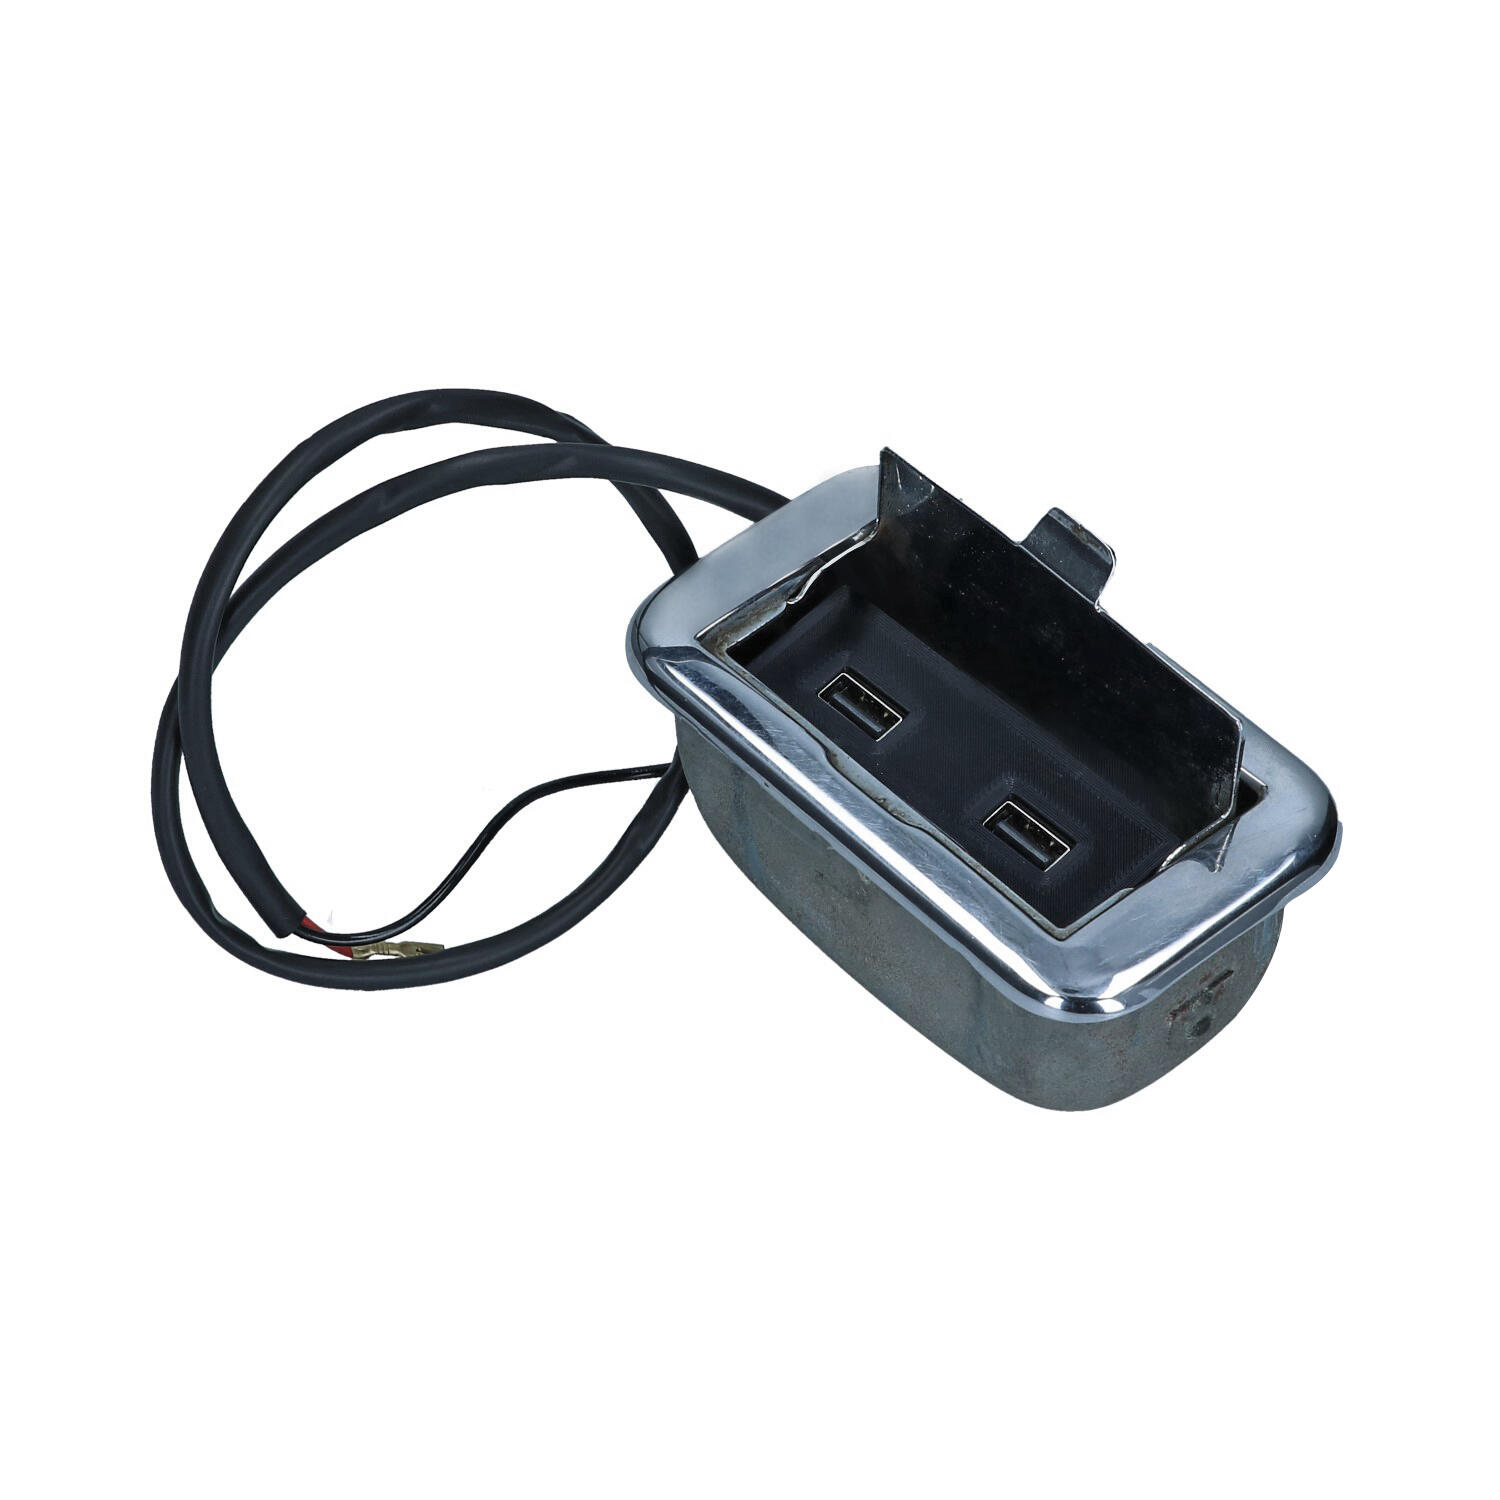 USB-Ladegerät für Aschenbecher 12 Volt, Bus -07/67